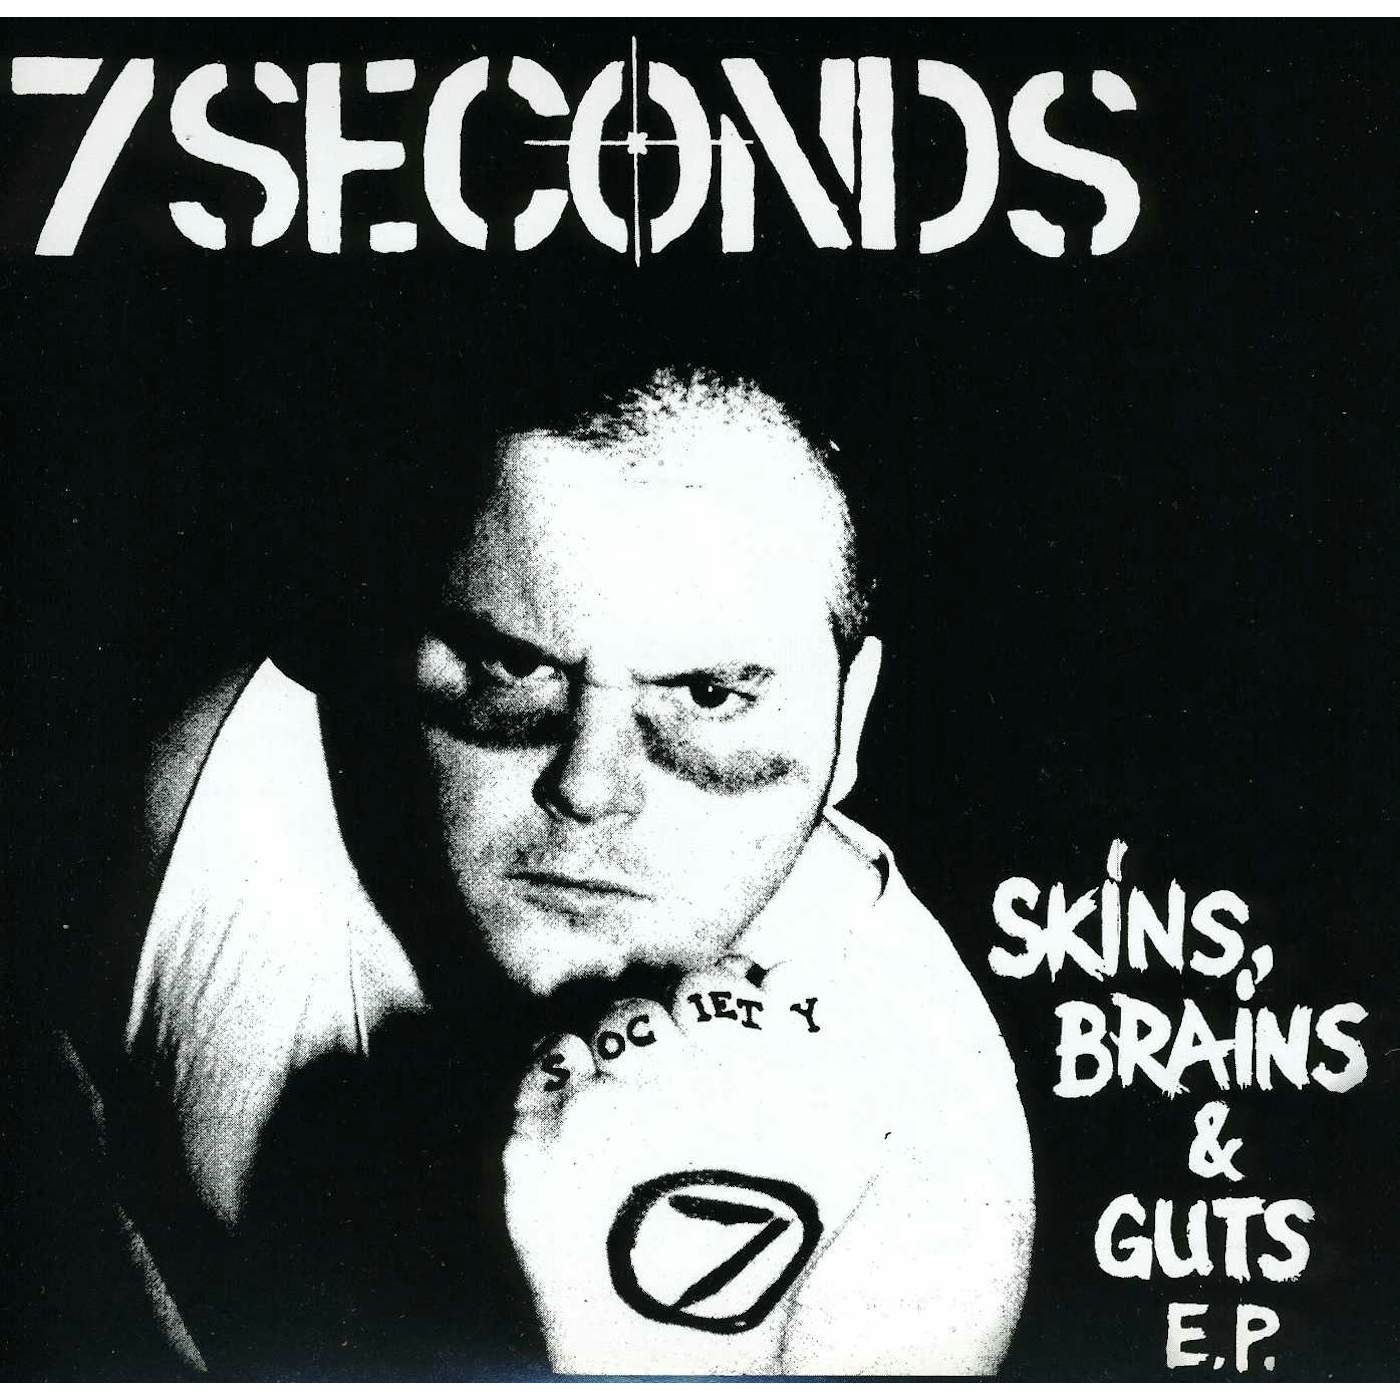 7 Seconds SKINS BRAINS & GUTS Vinyl Record